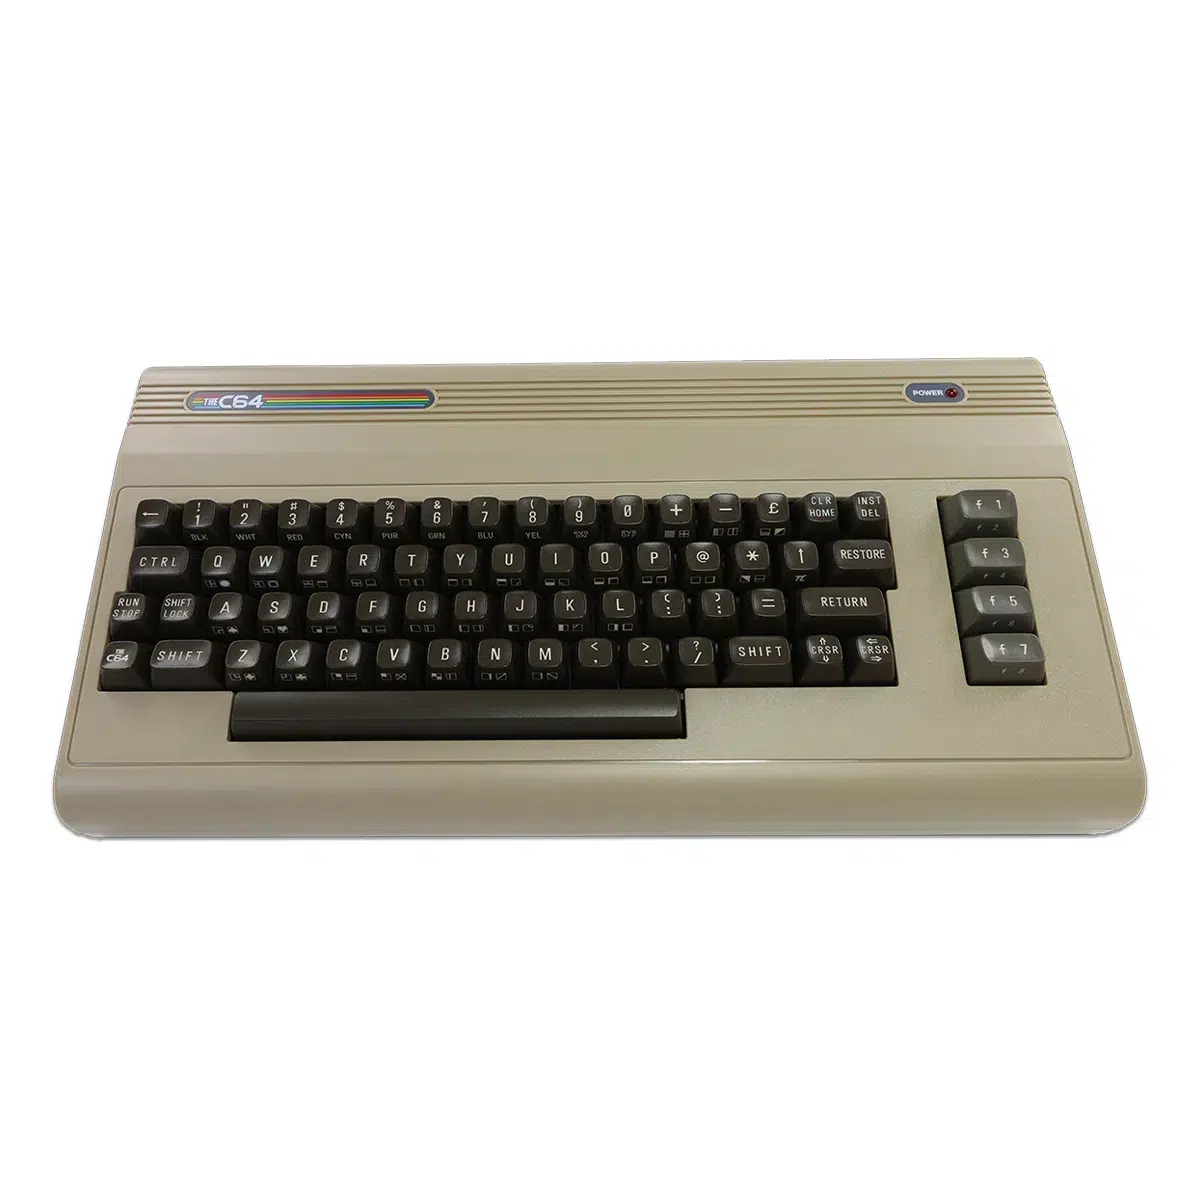 The C64 Maxi (No PSU) (oR) (INT) Image 12